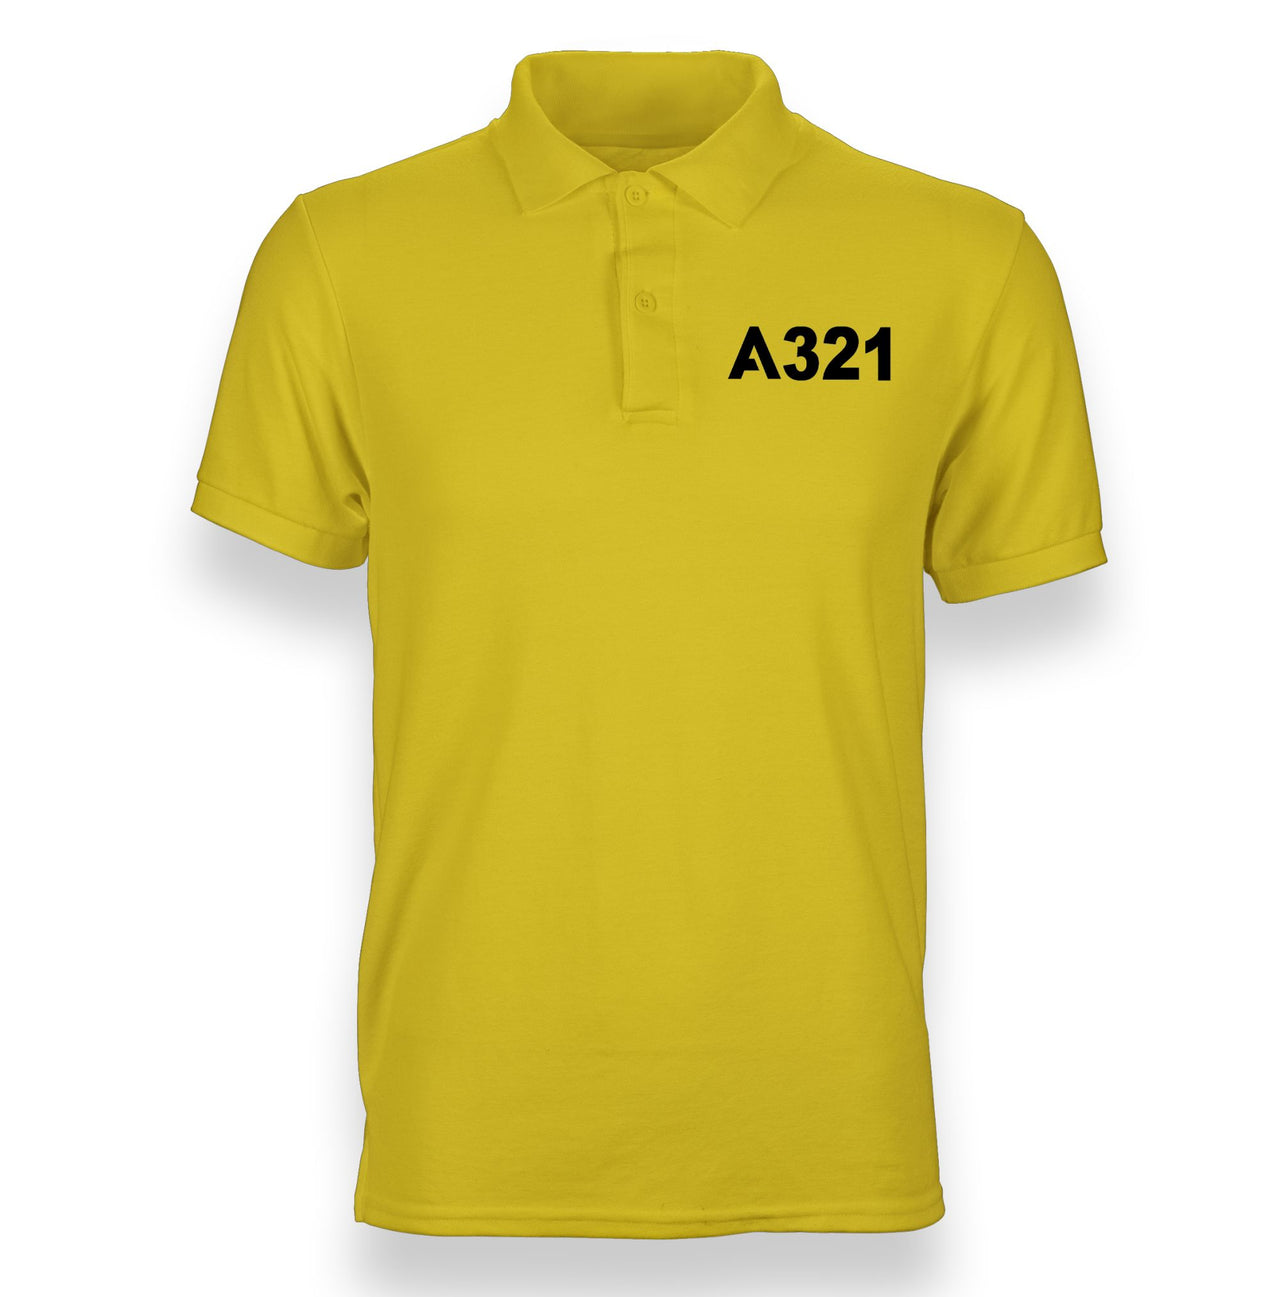 A321 Flat Text Designed "WOMEN" Polo T-Shirts